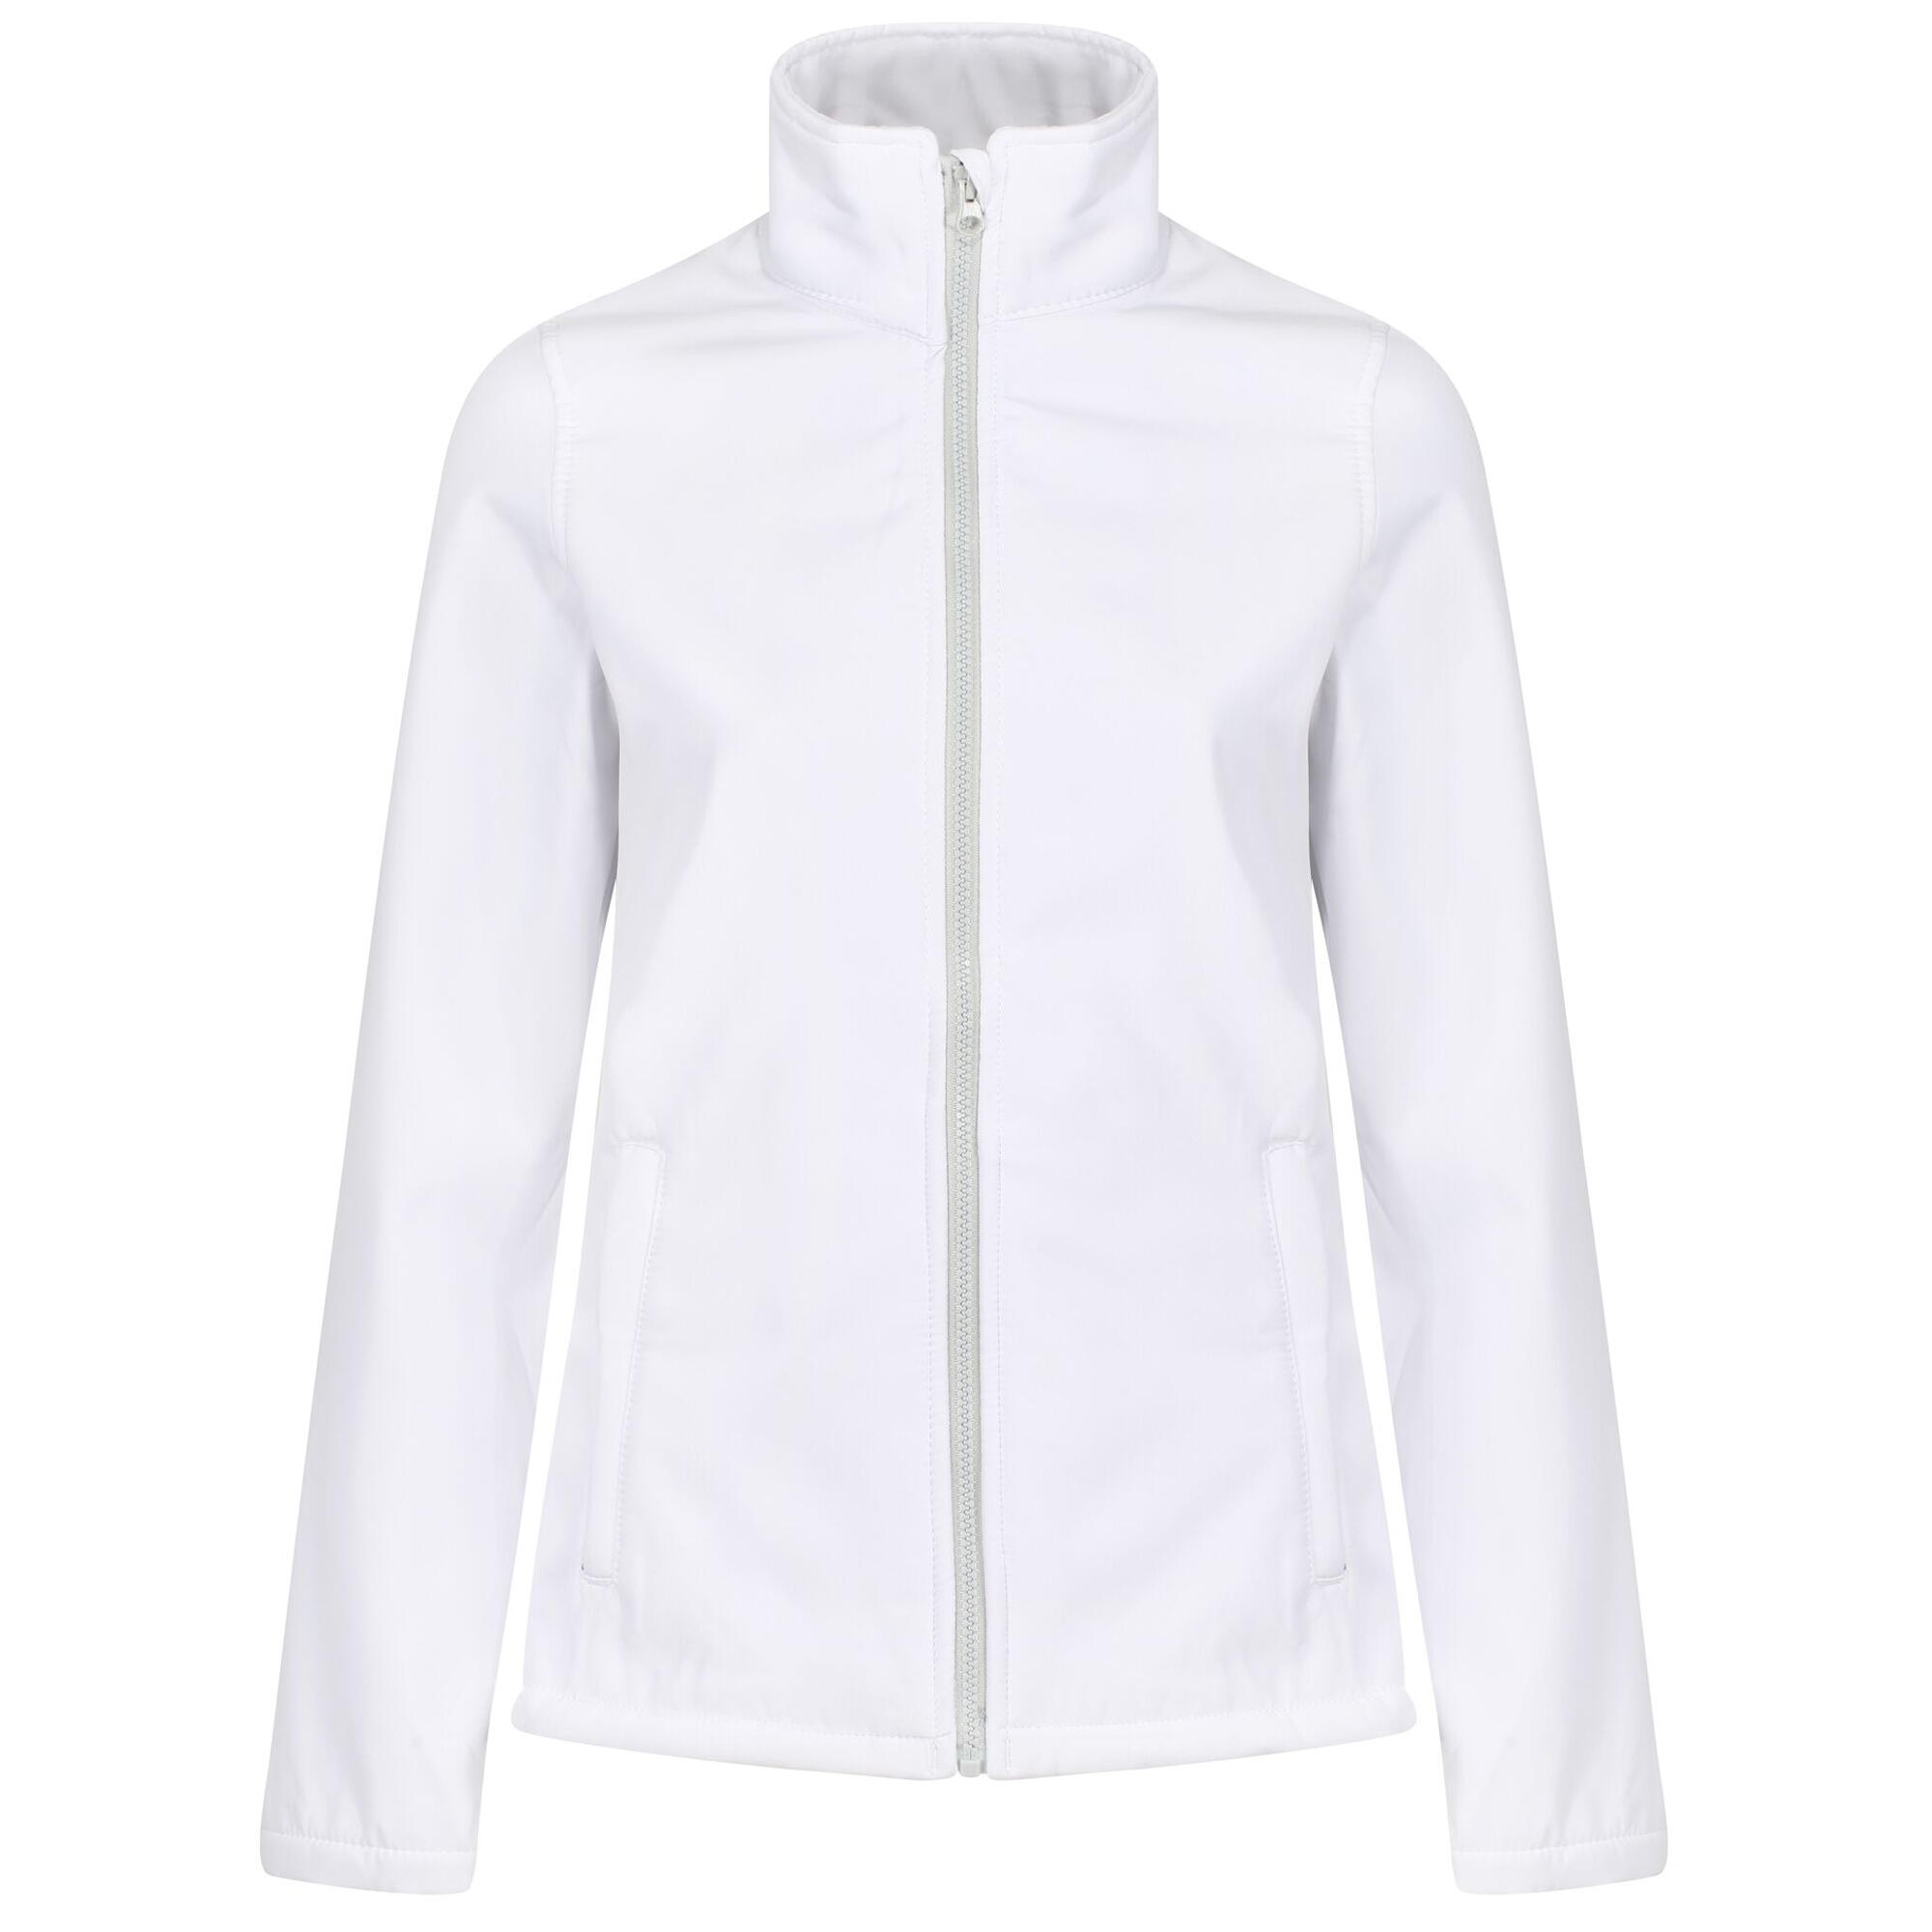 Womens/Ladies Ablaze Printable Softshell Jacket (White/Light Steel) 1/4